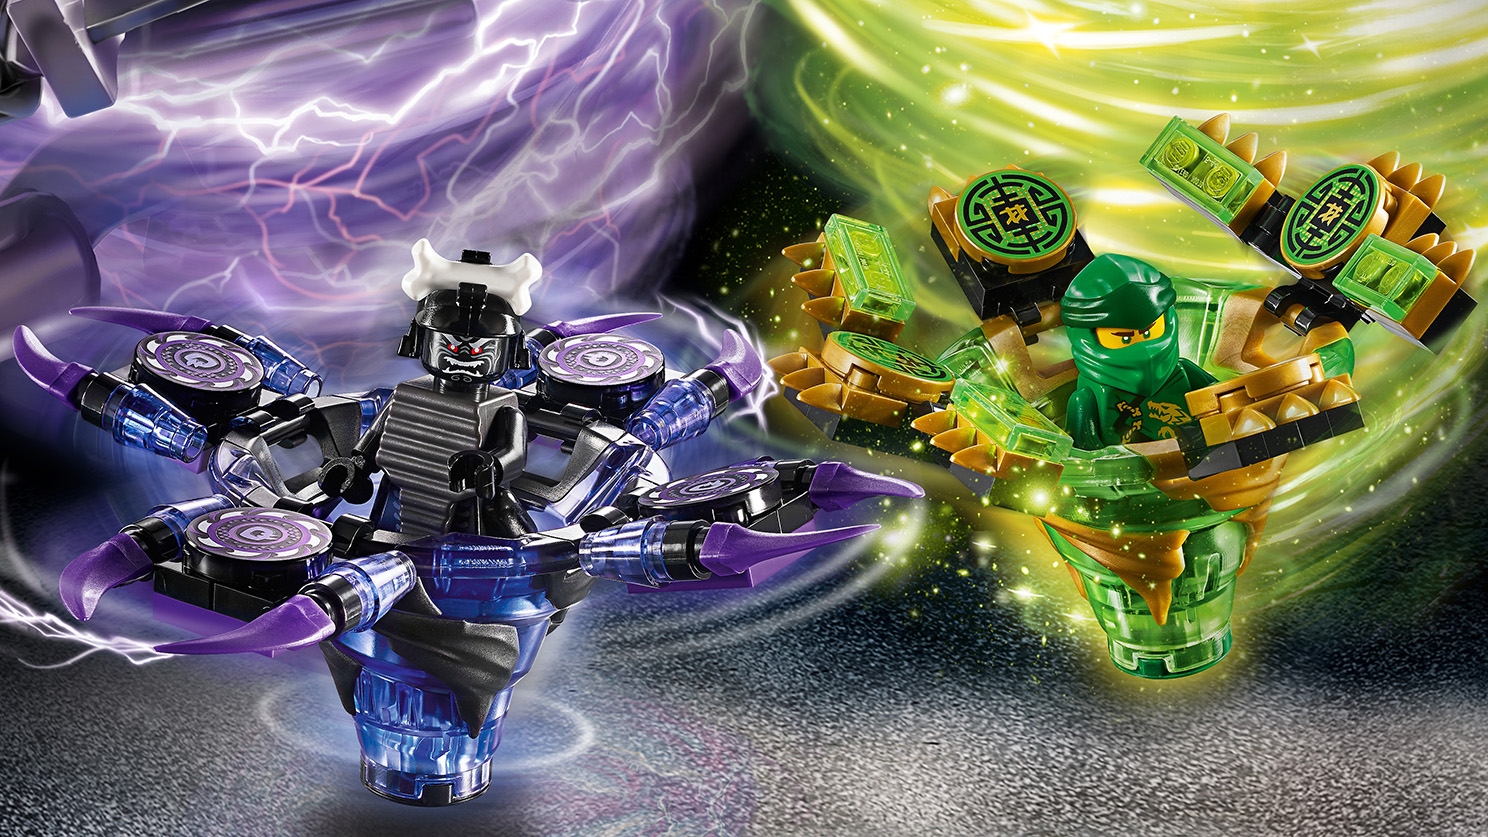 LEGO 70664 Ninjago Spinjitzu Lloyd VS Garmadon for sale online